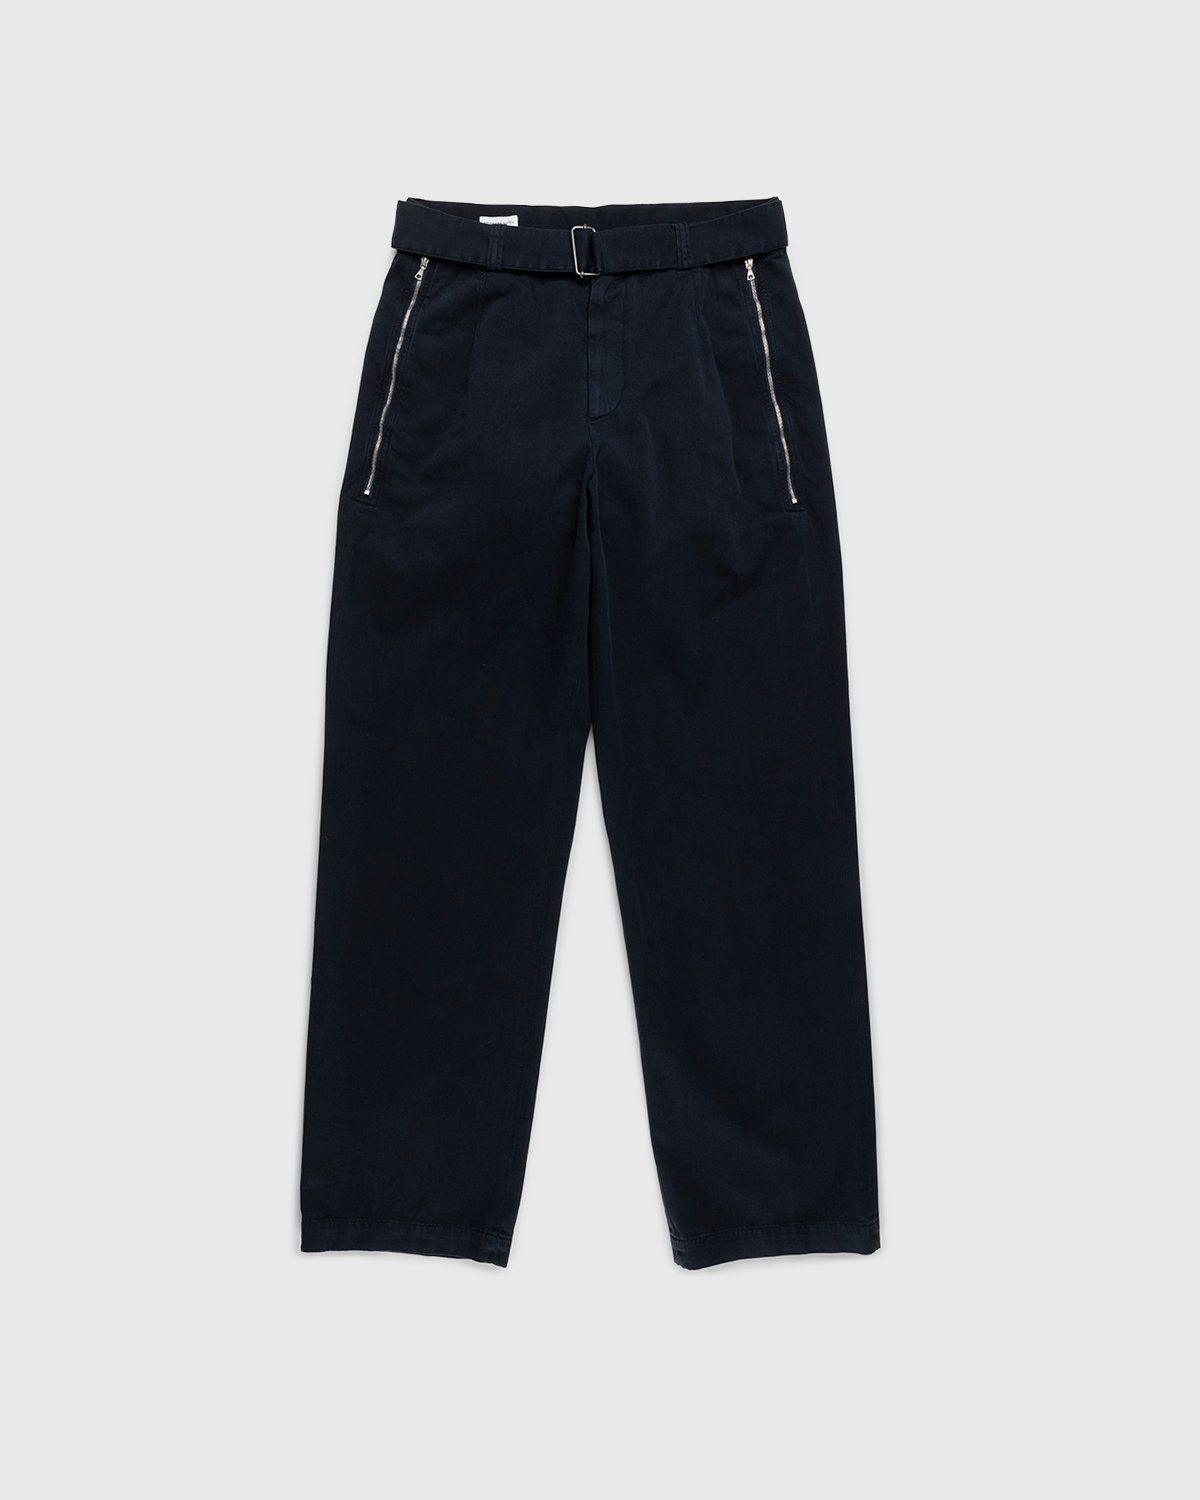 Dries van Noten – Penson Pants Navy - Trousers - Blue - Image 1